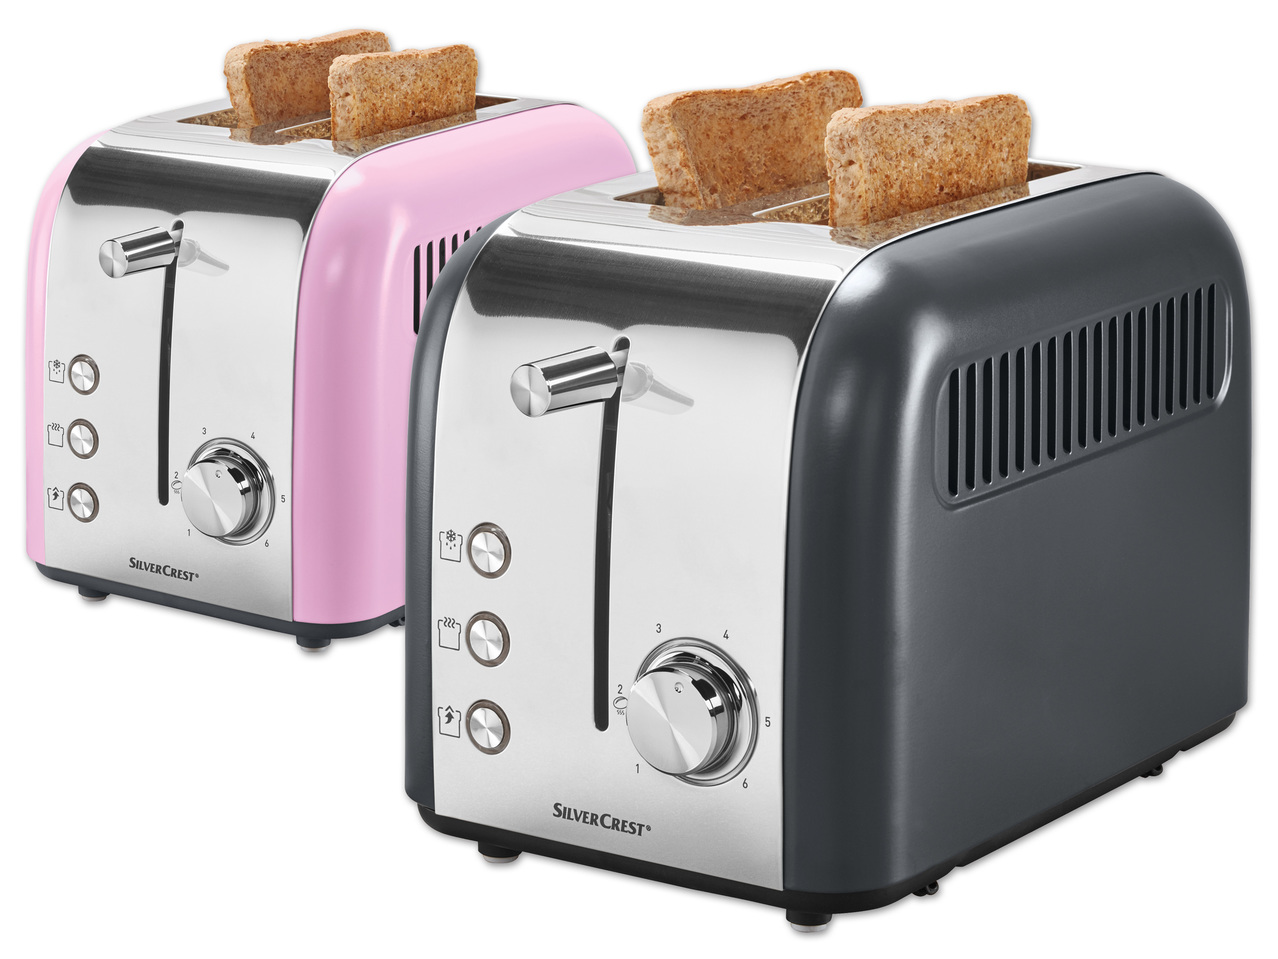 SILVERCREST(R) Toaster